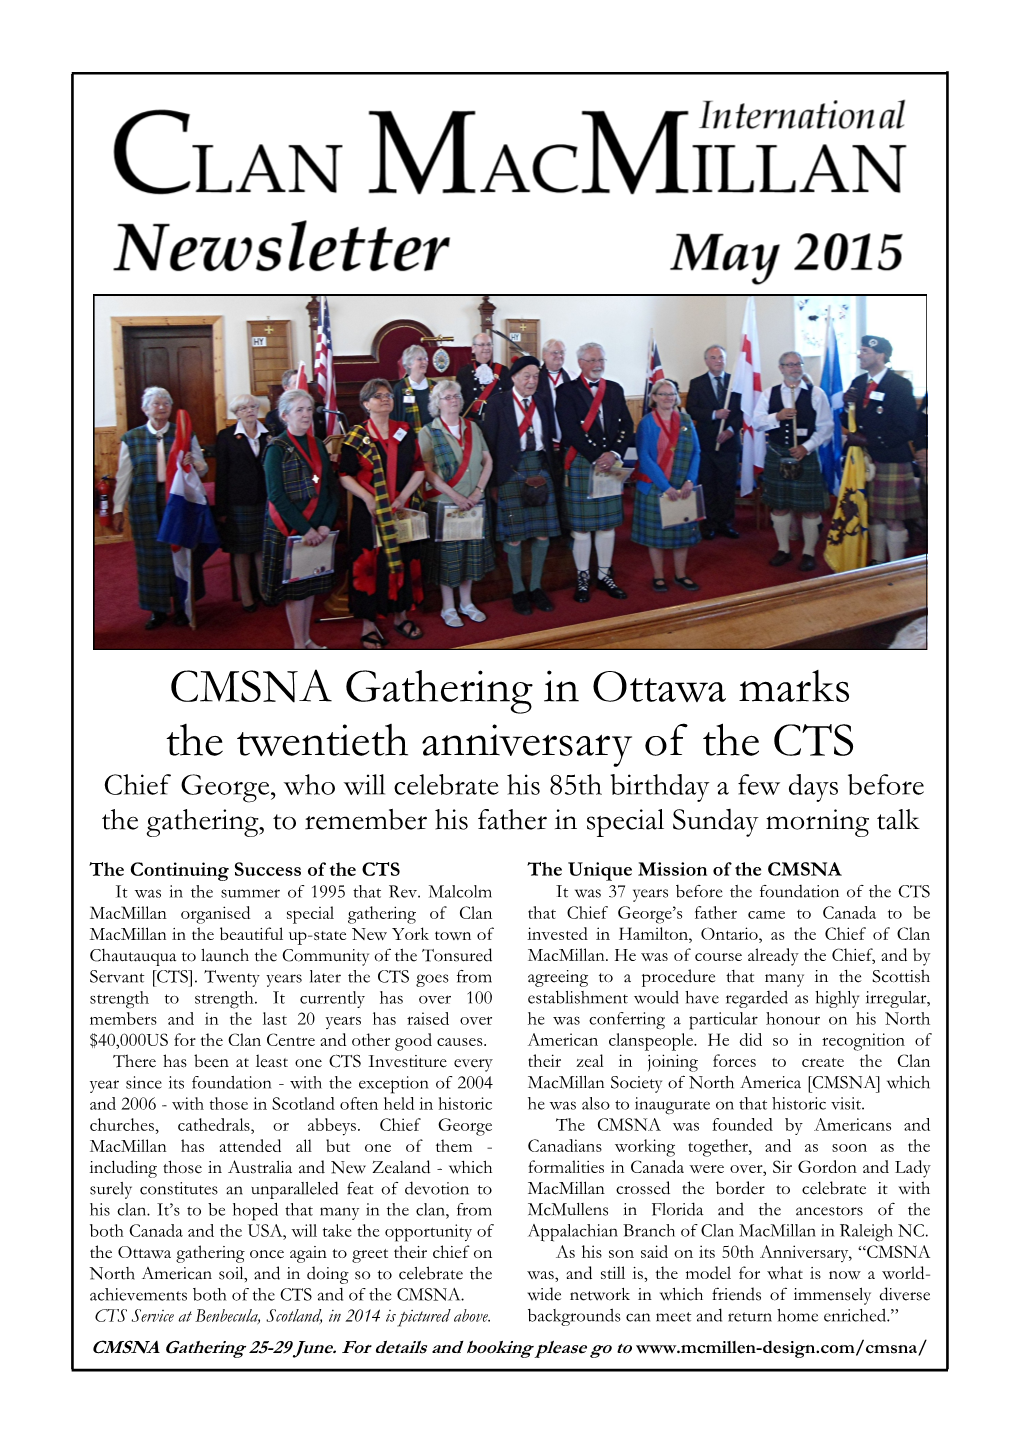 CMSNA Gathering in Ottawa Marks the Twentieth Anniversary of The